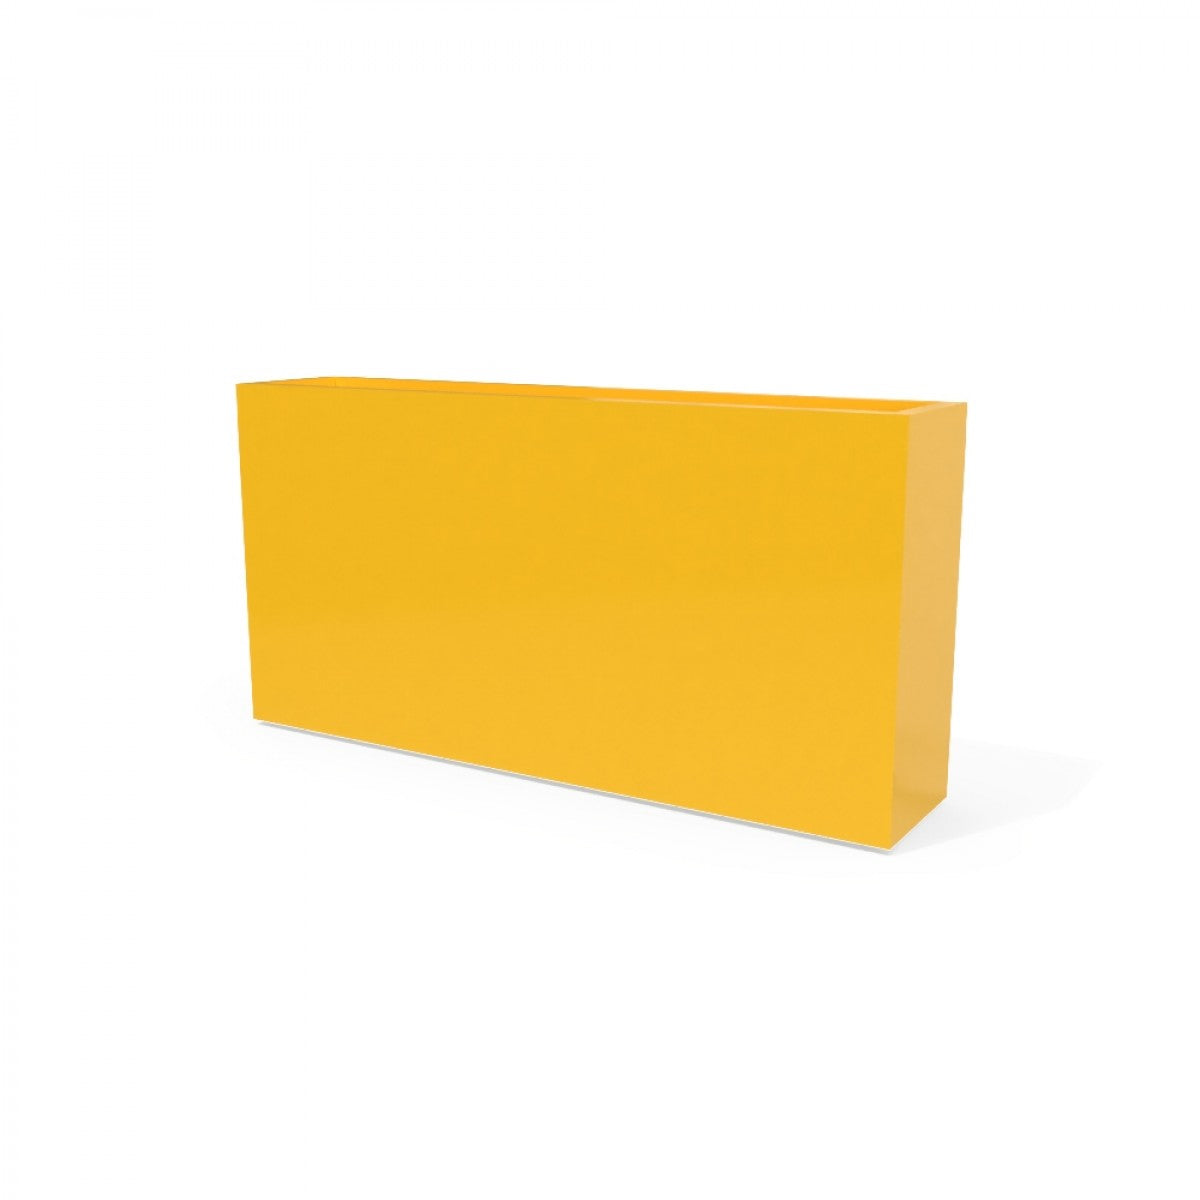 Milano FIBERGLASS RECTANGULAR PLANTER BOX - Size 48"L x 10"W x 24"H